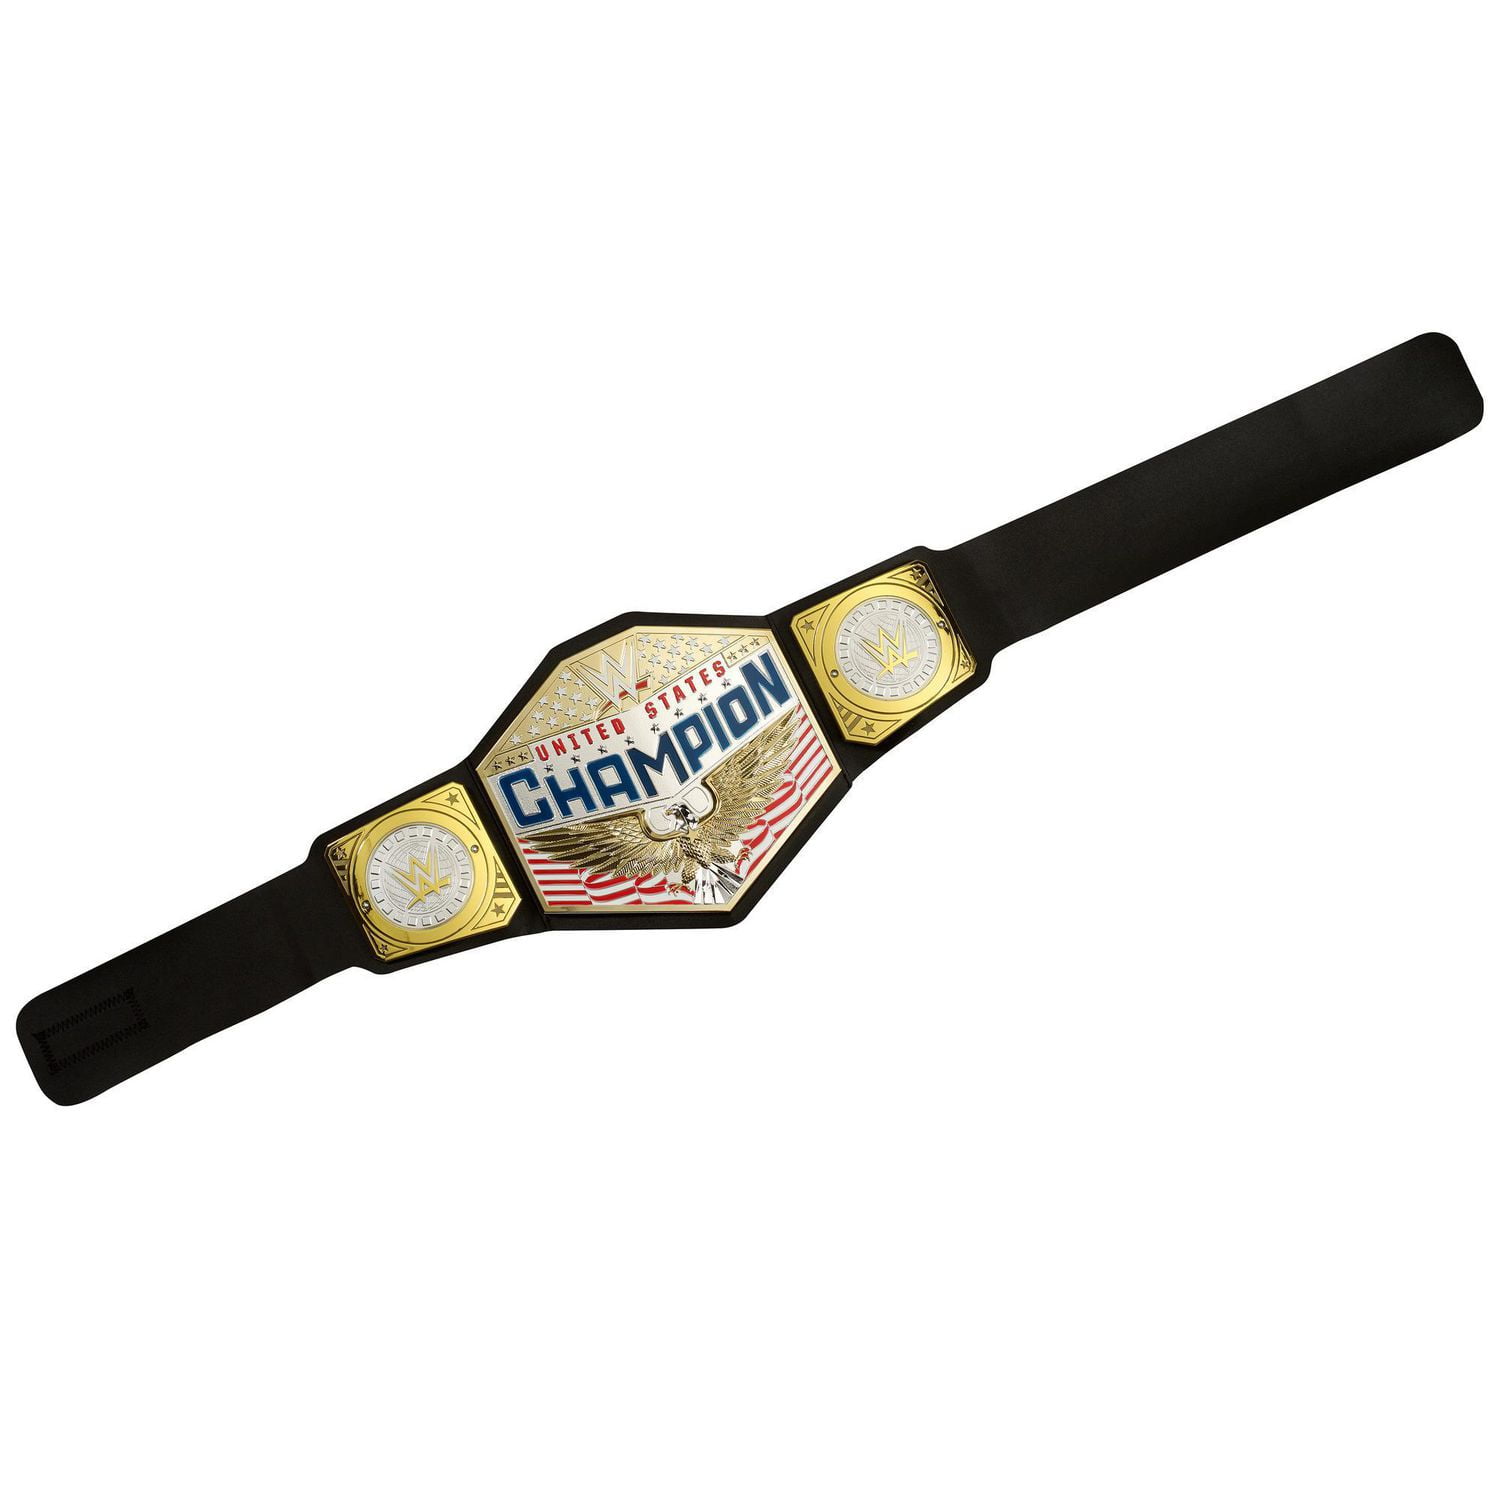 United States Crusierweight Champion  Nwa wrestling, Wrestling gear, Wwe  championship belts